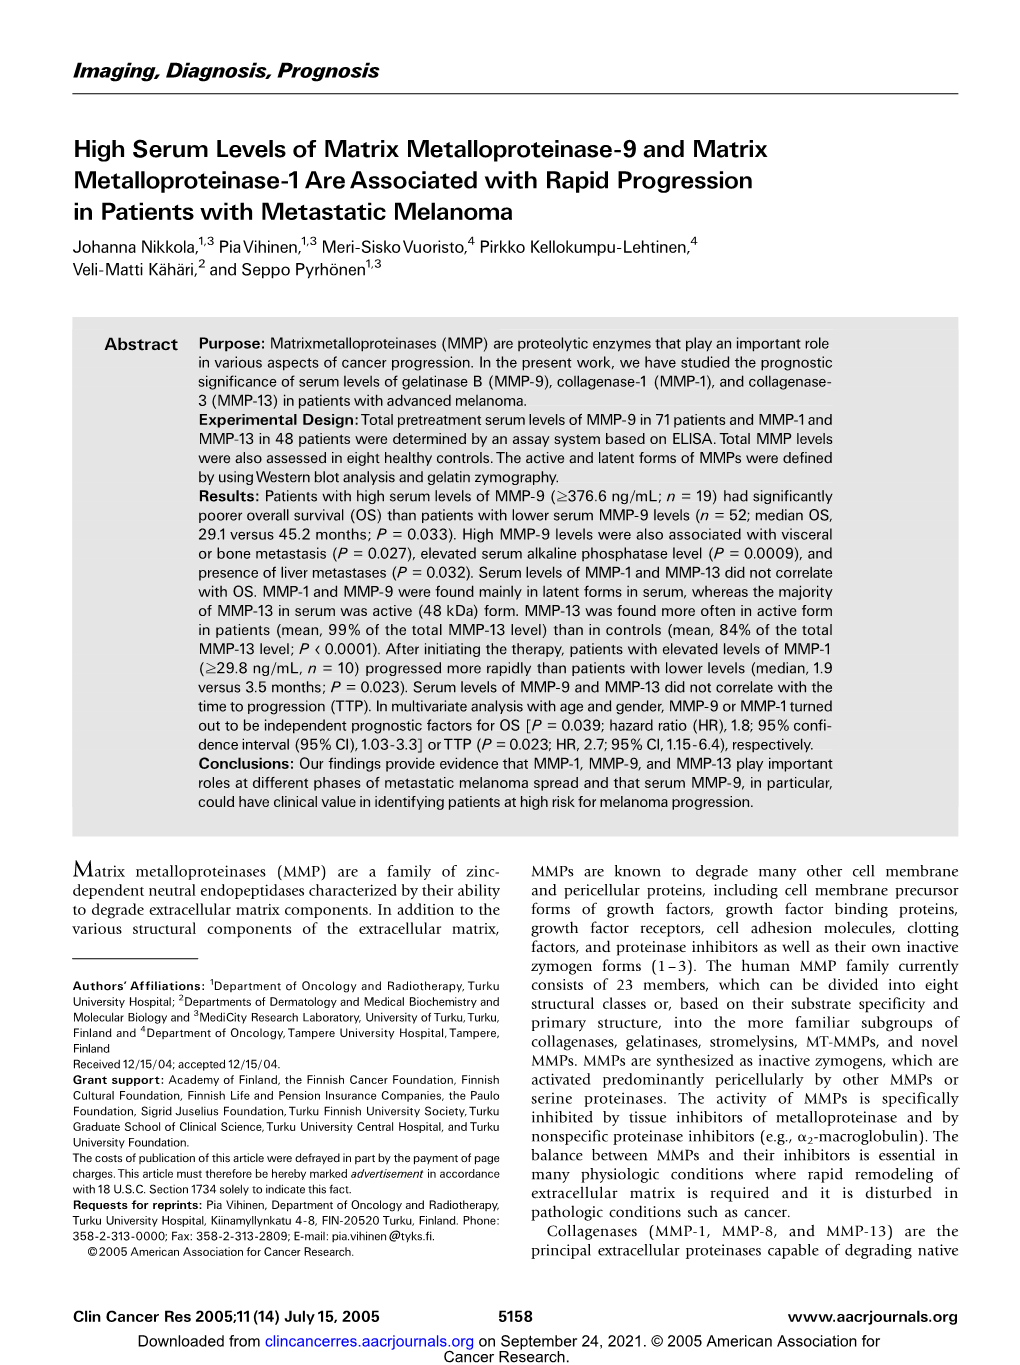 High Serum Levels of Matrix Metalloproteinase-9 and Matrix